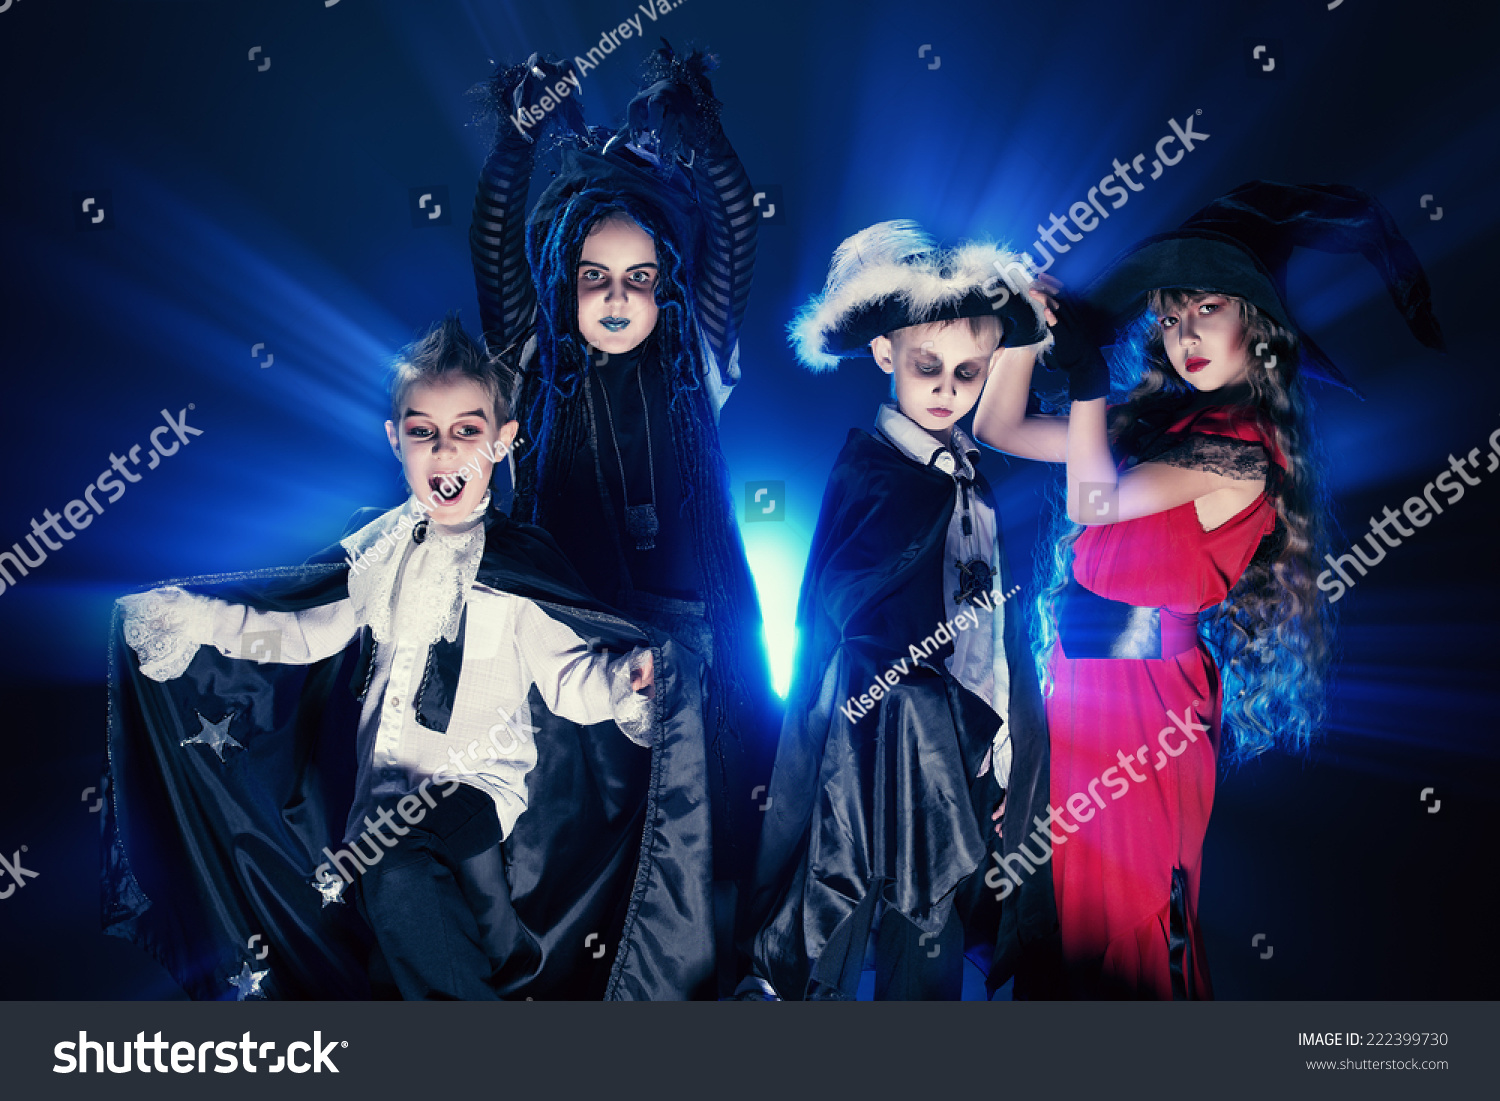 Cheerful children in halloween costumes posing over dark background. #222399730